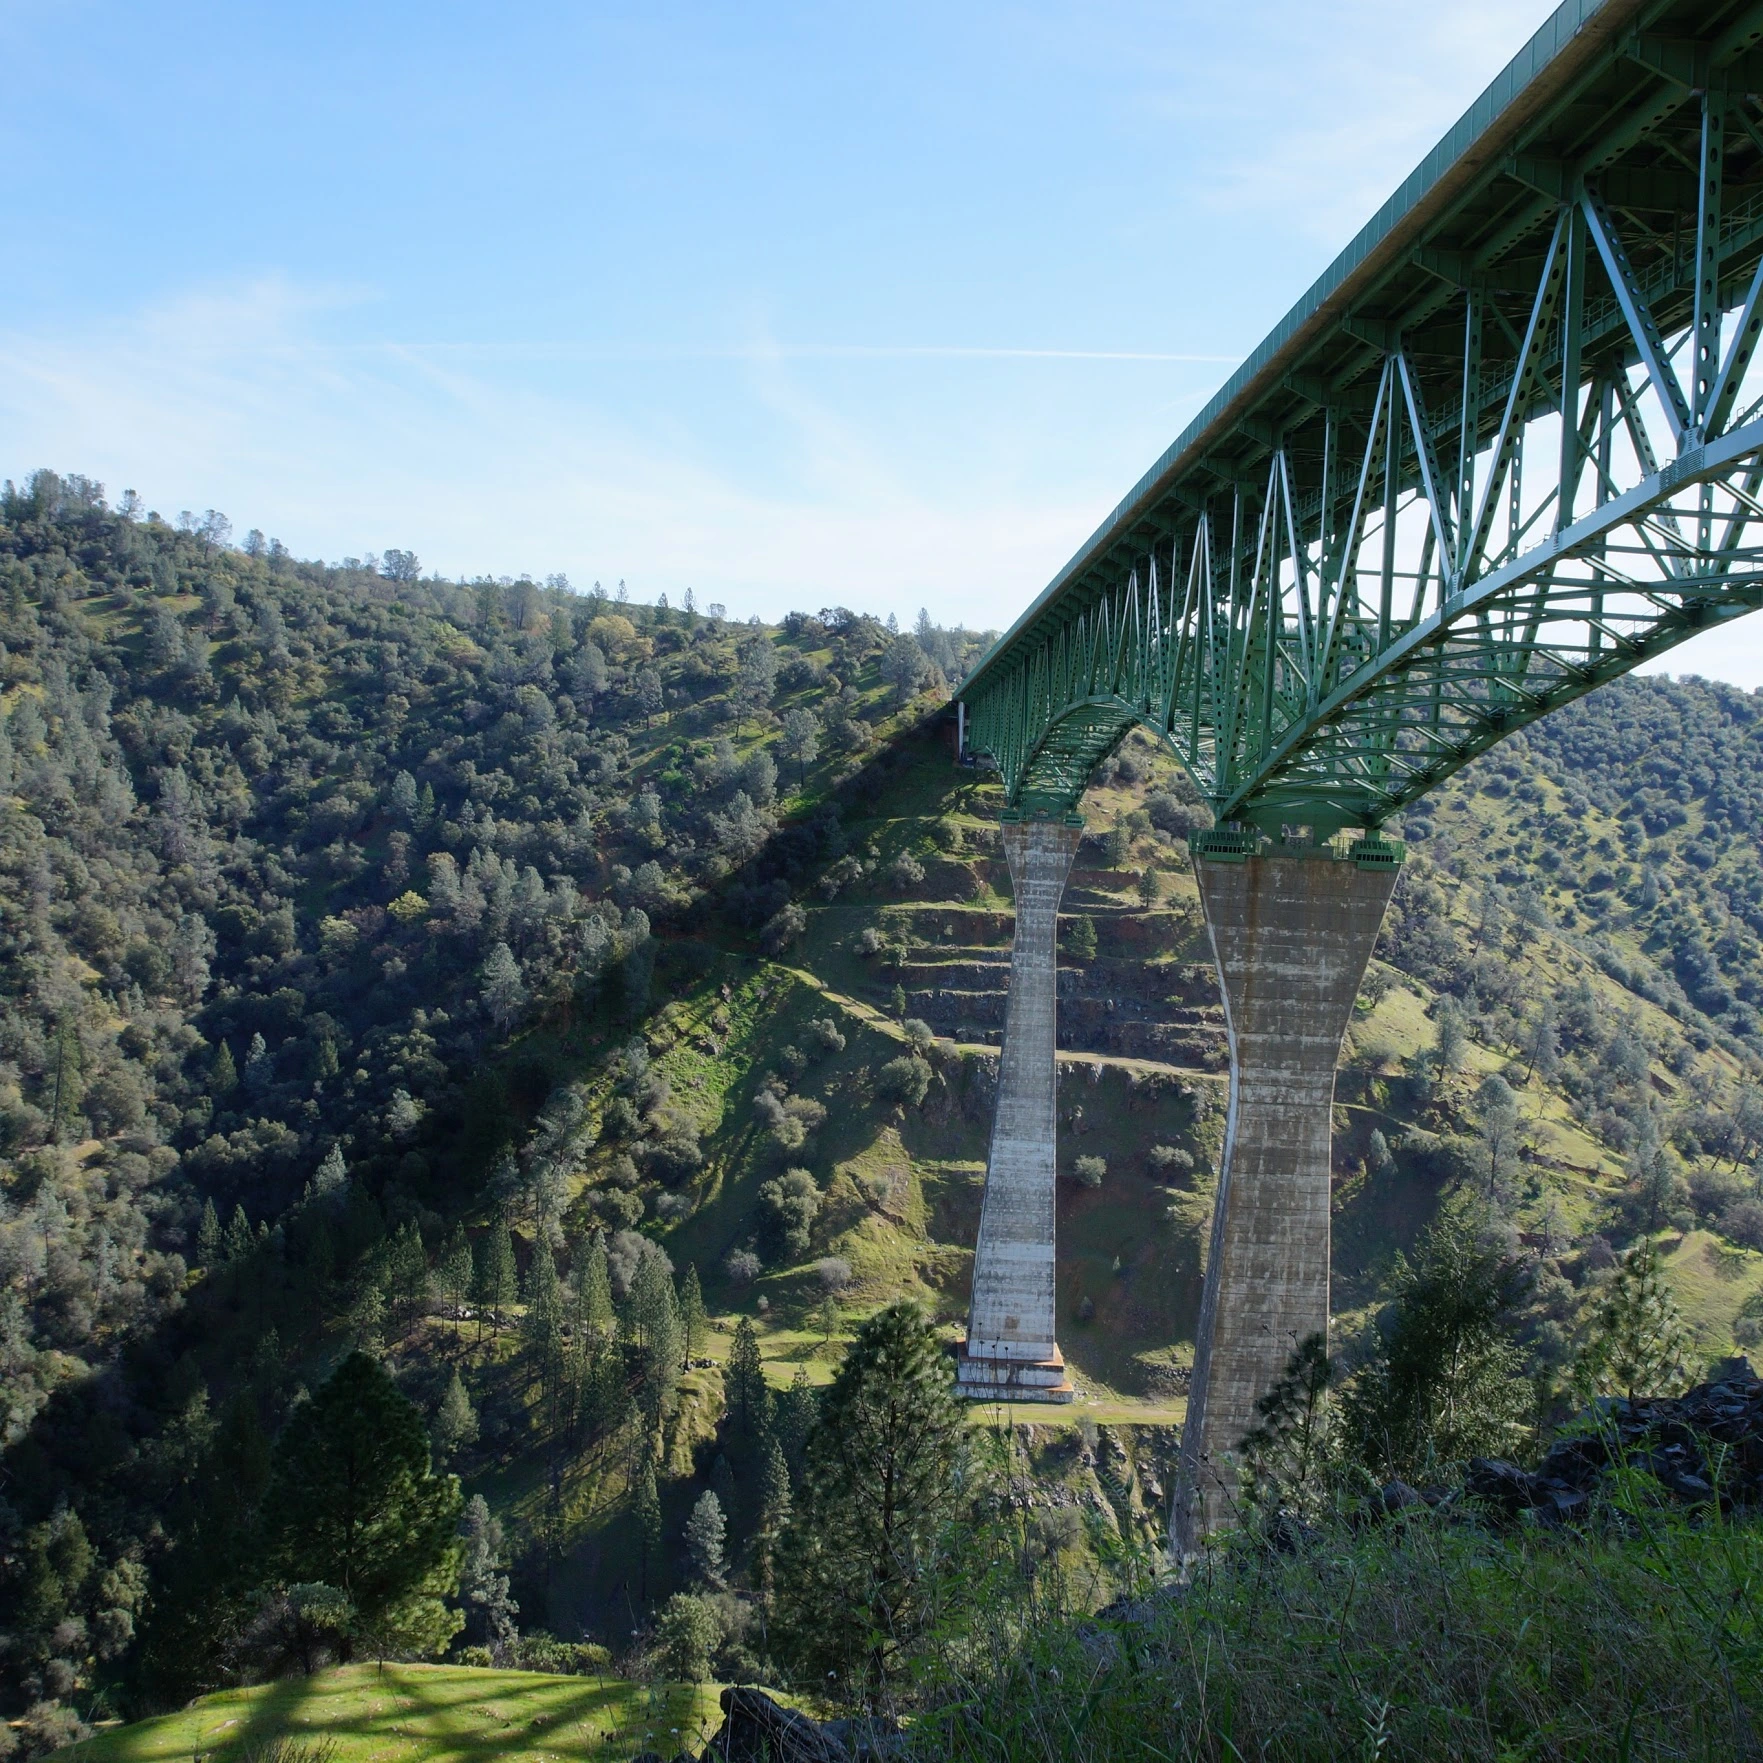 Auburn Bridge stretches across the gap between green hillsides.